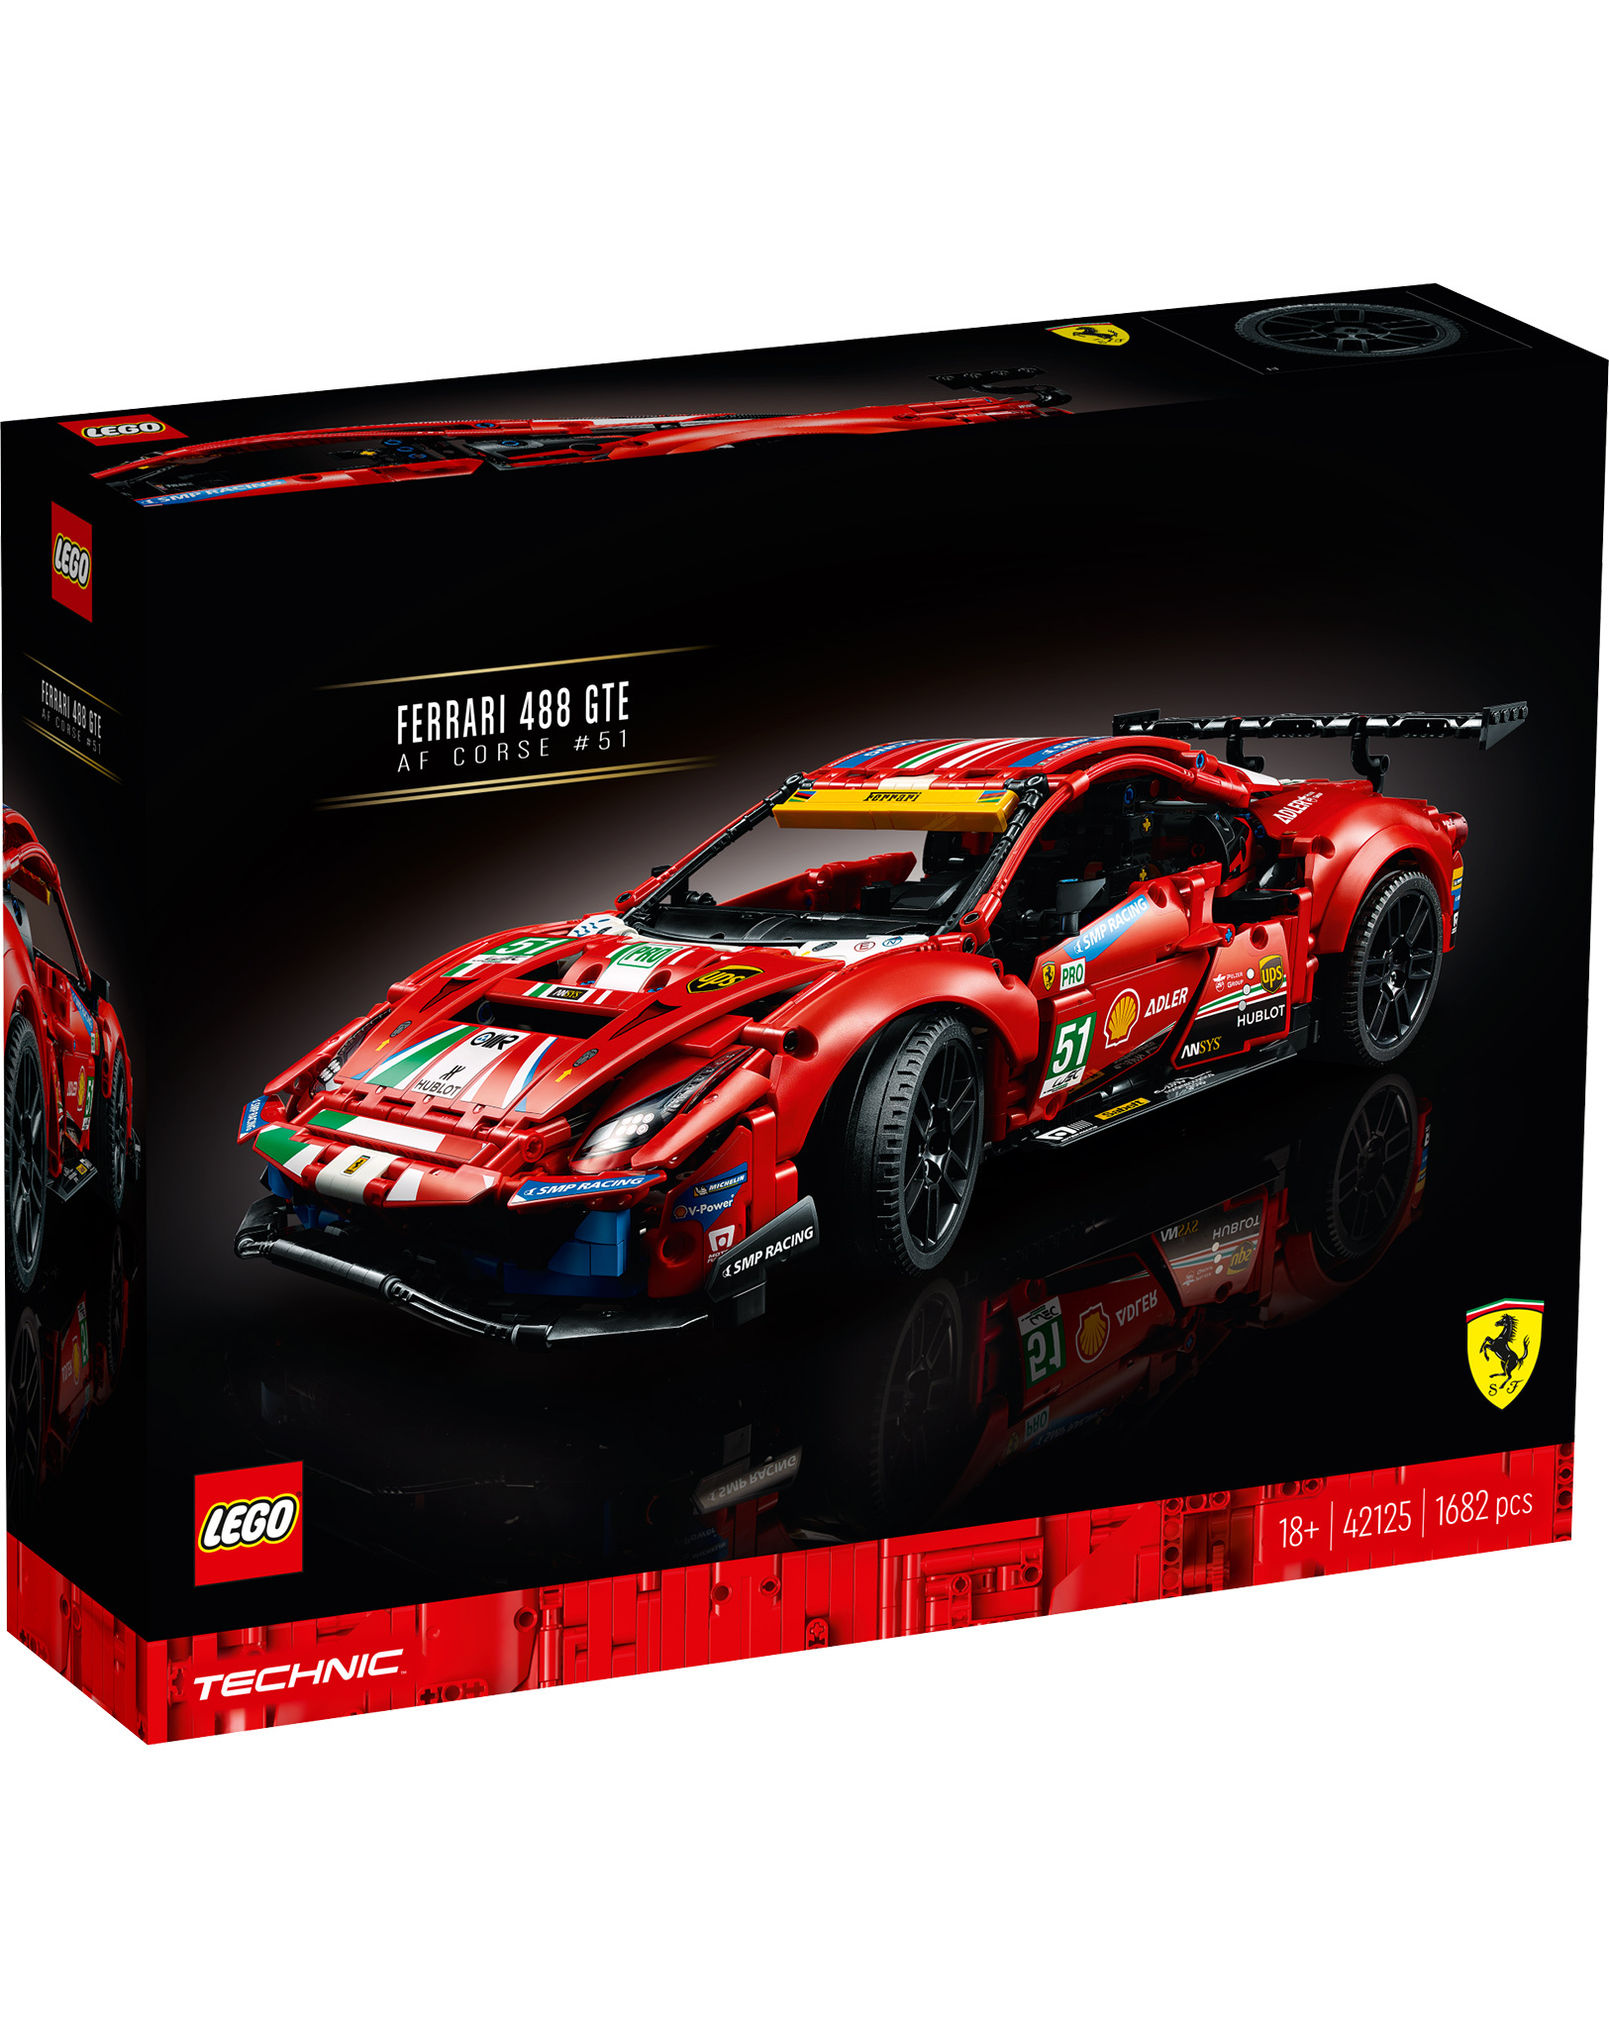 LEGO® 42125 Technic Ferrari 488 GTE AF Corse 51 kaufen